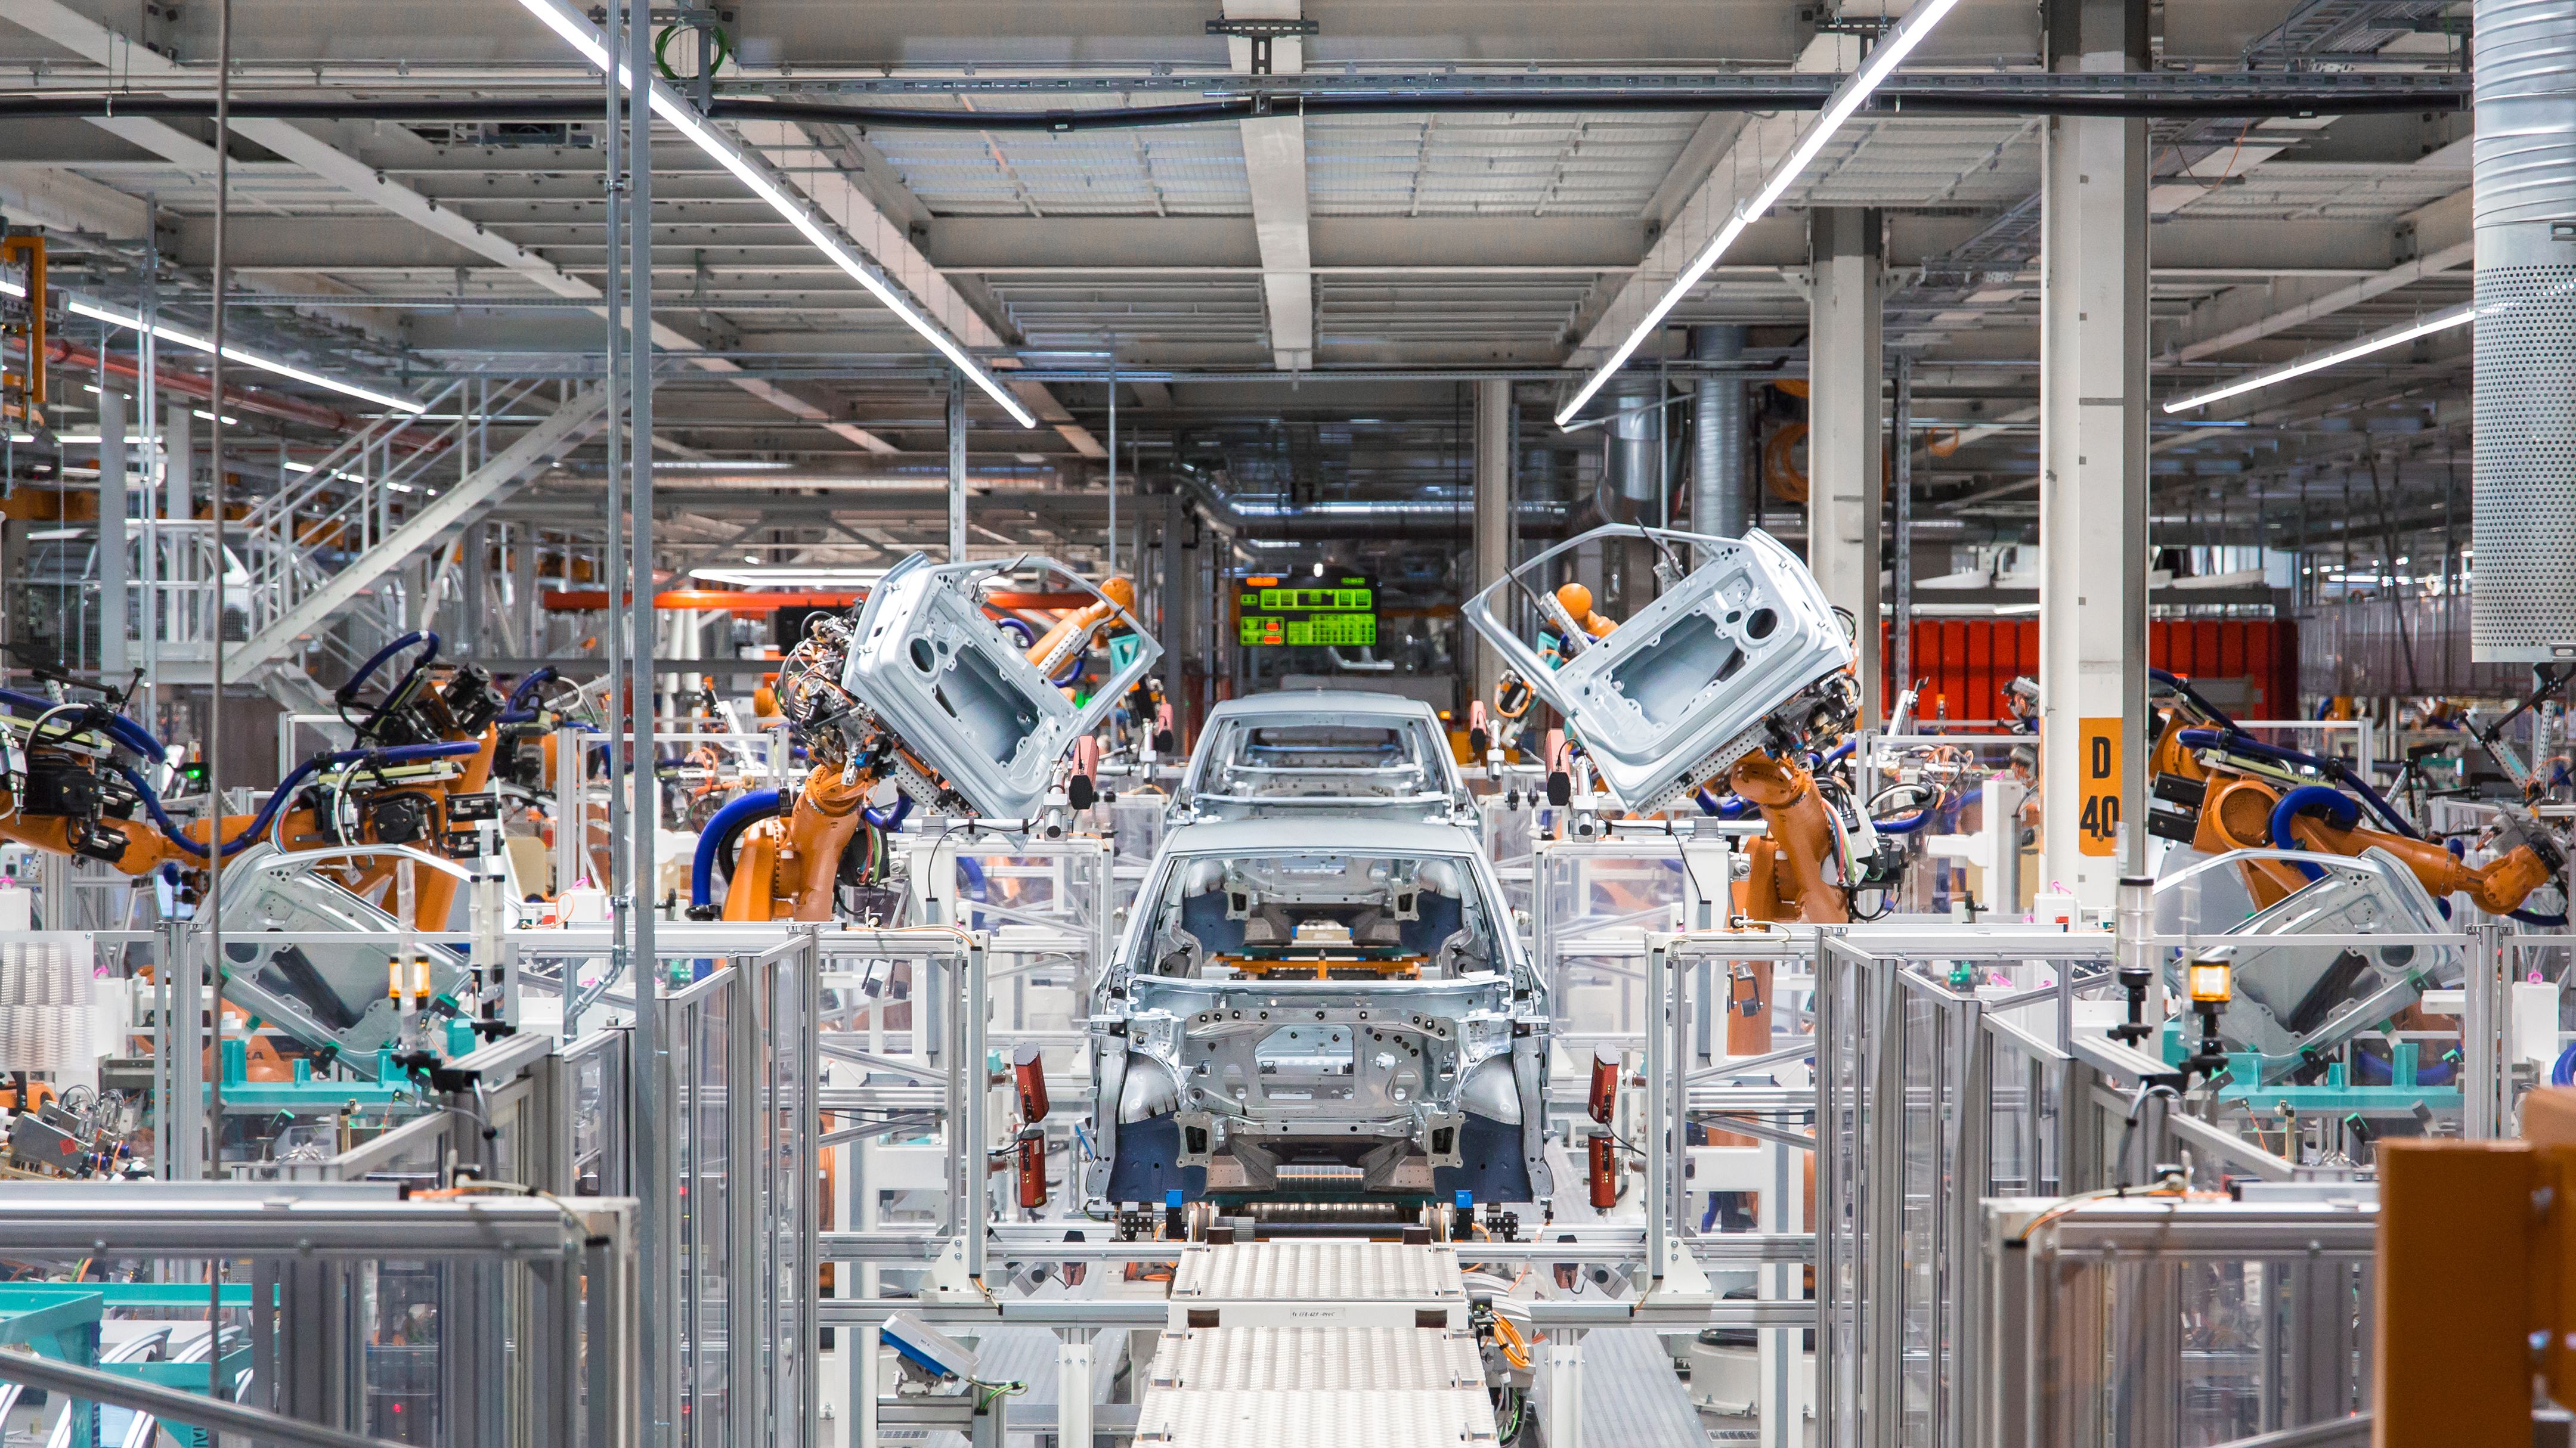 Siemens supports Volkswagen to develop digitized electric car